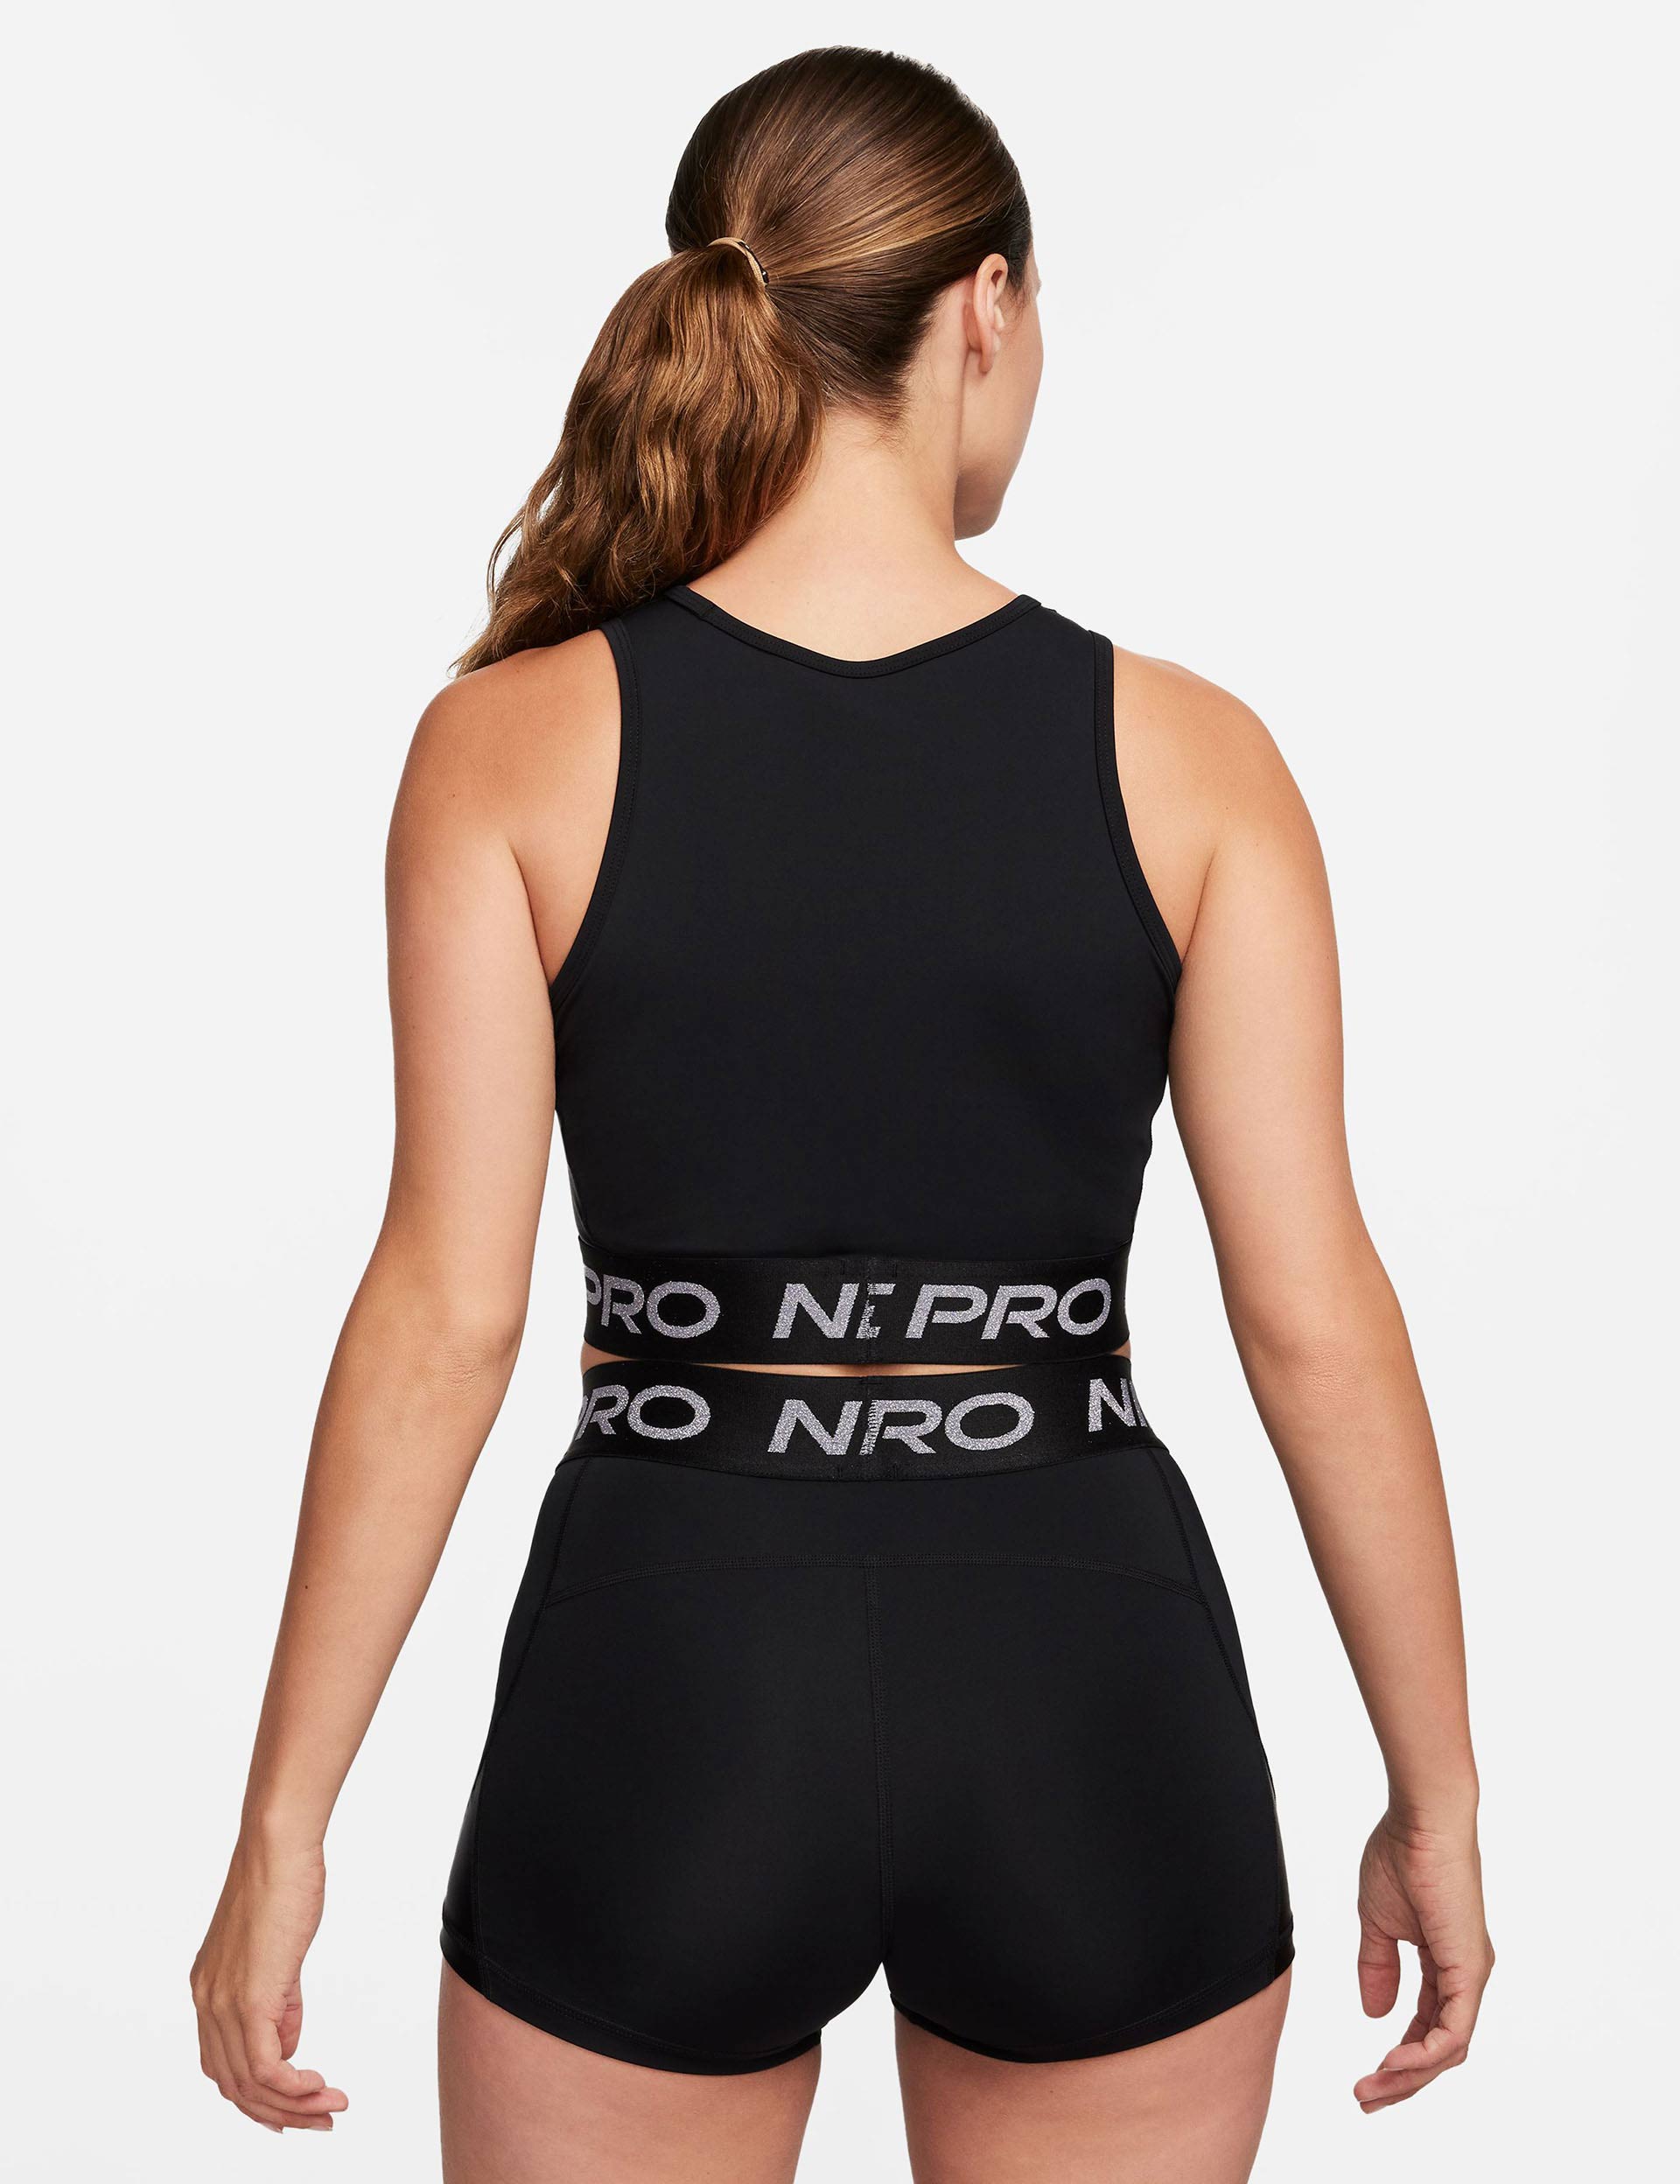 Women's Nike Pro Tank Tops & Sleeveless Shirts. Nike CA